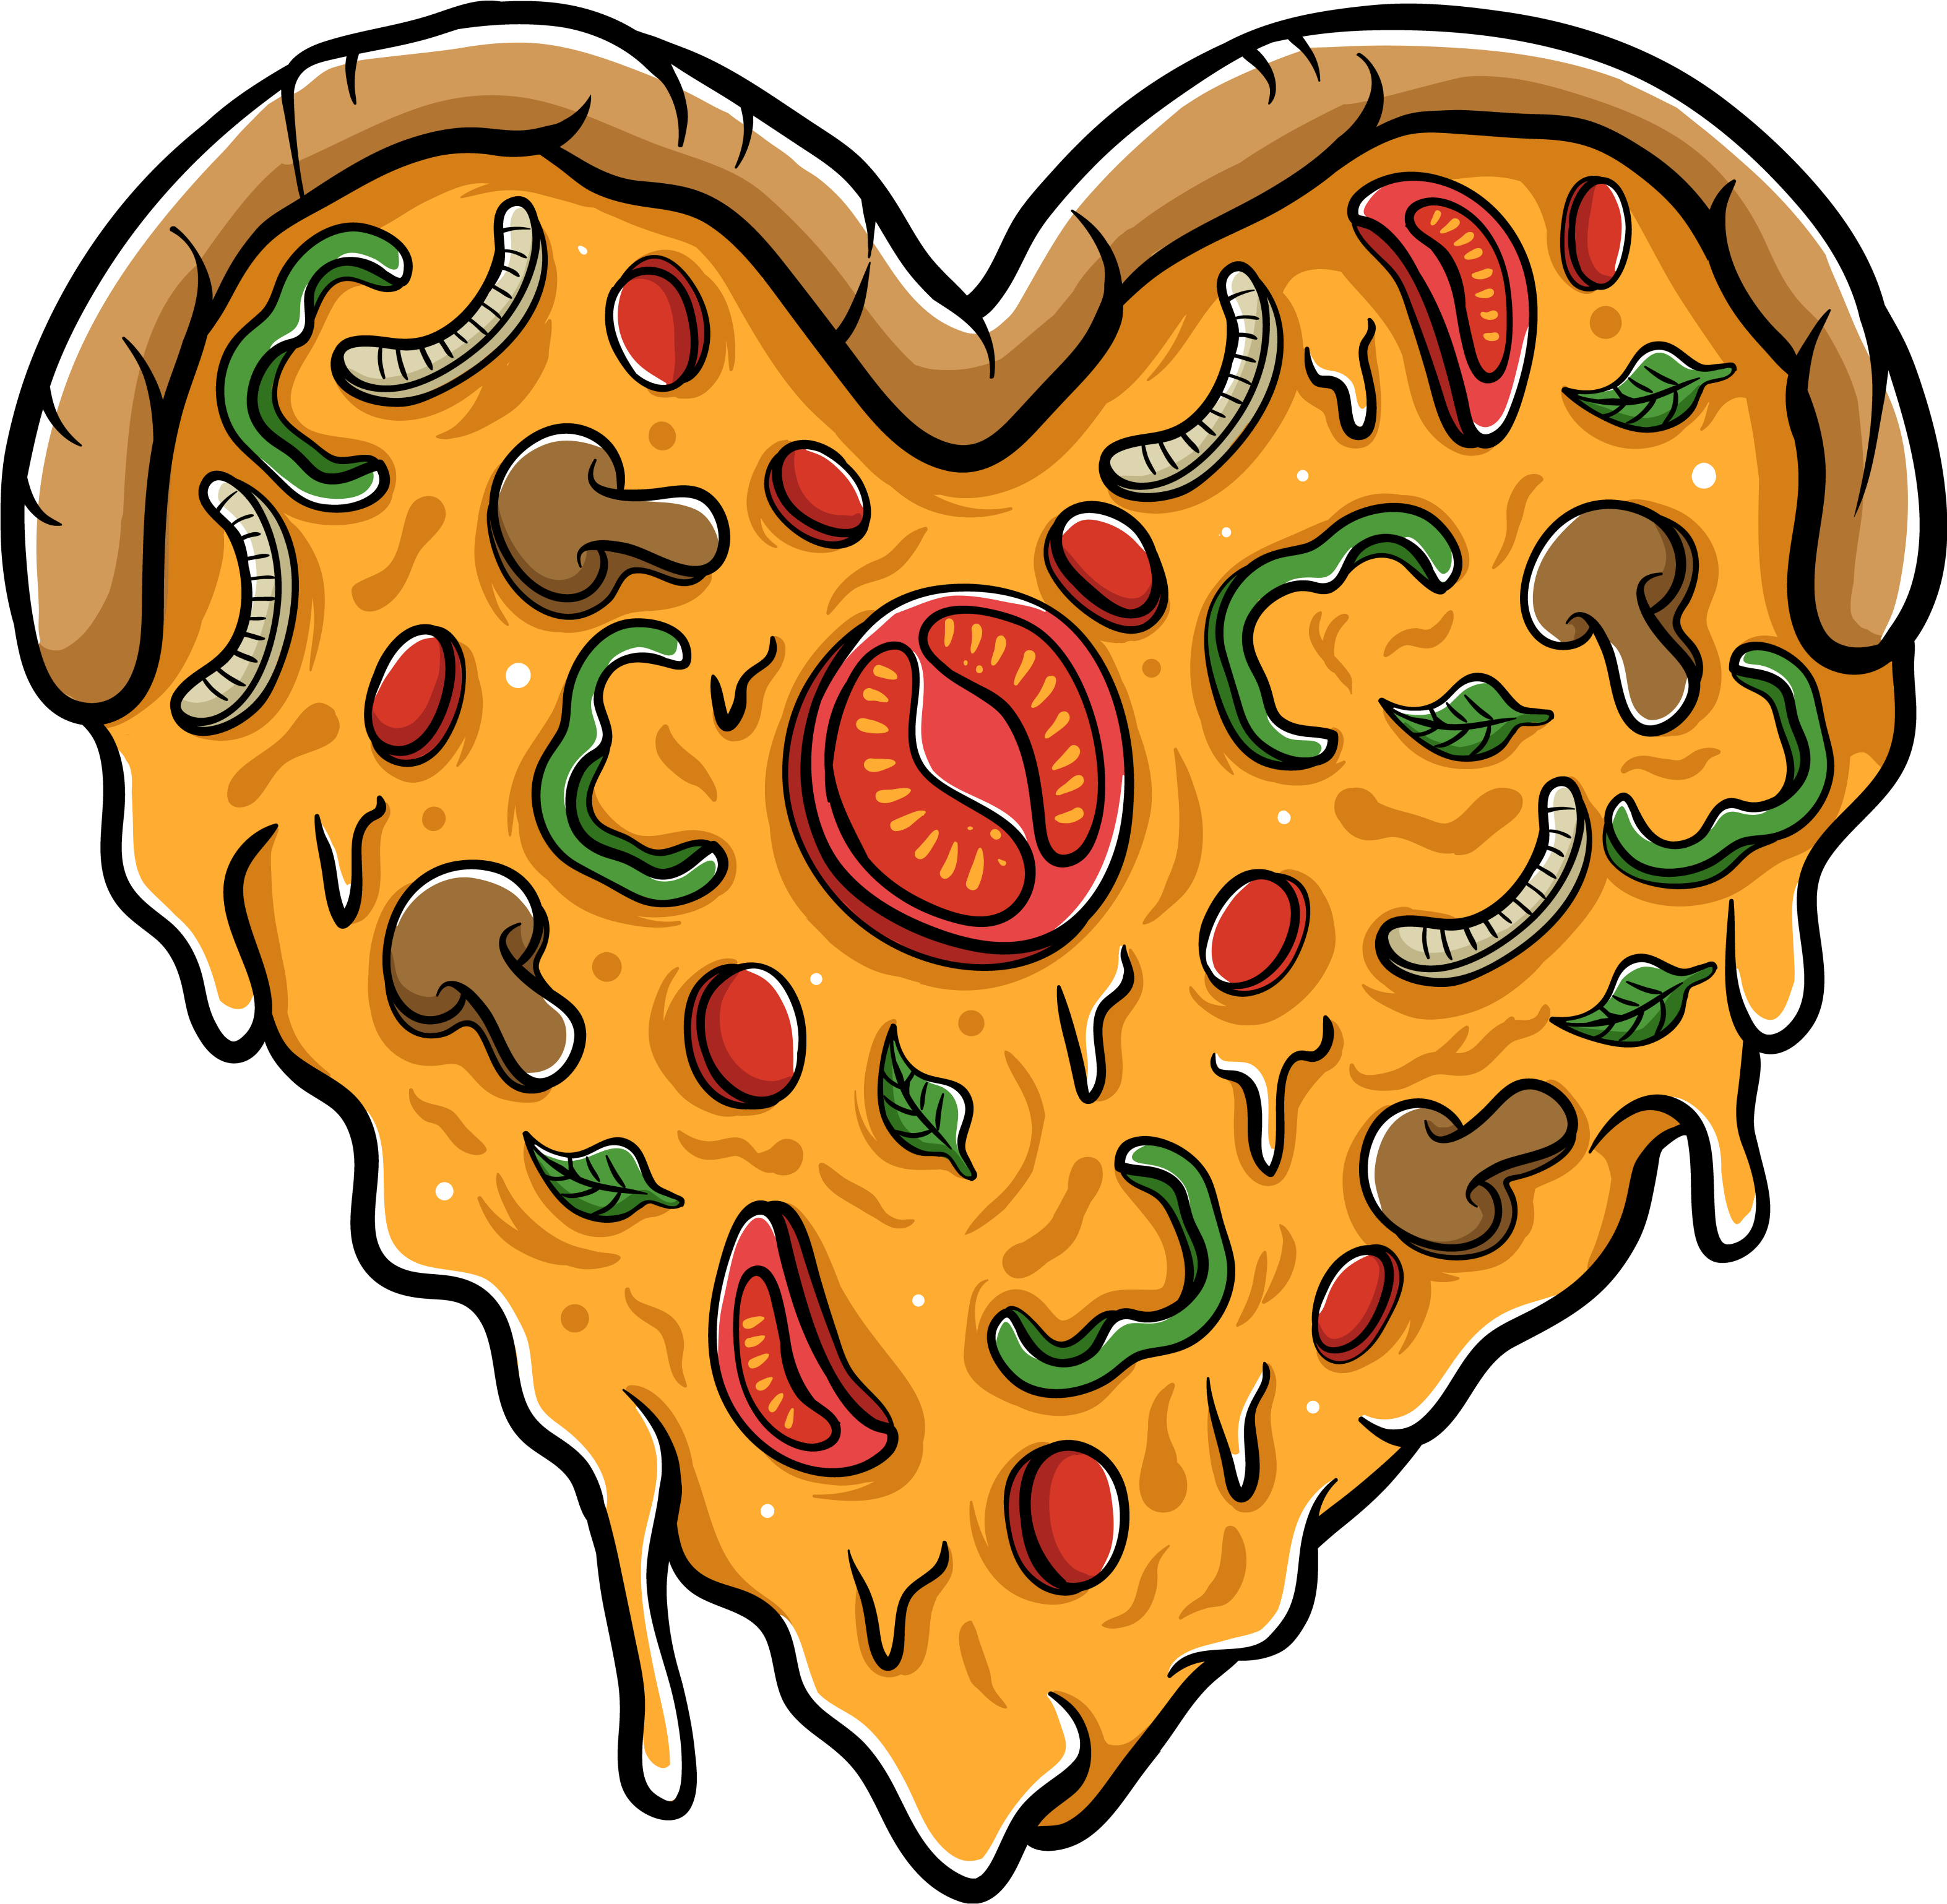 Пицца любовь. Пицца в форме сердца. Пицца стикер. Пицца иллюстрация. Игра такая пицца